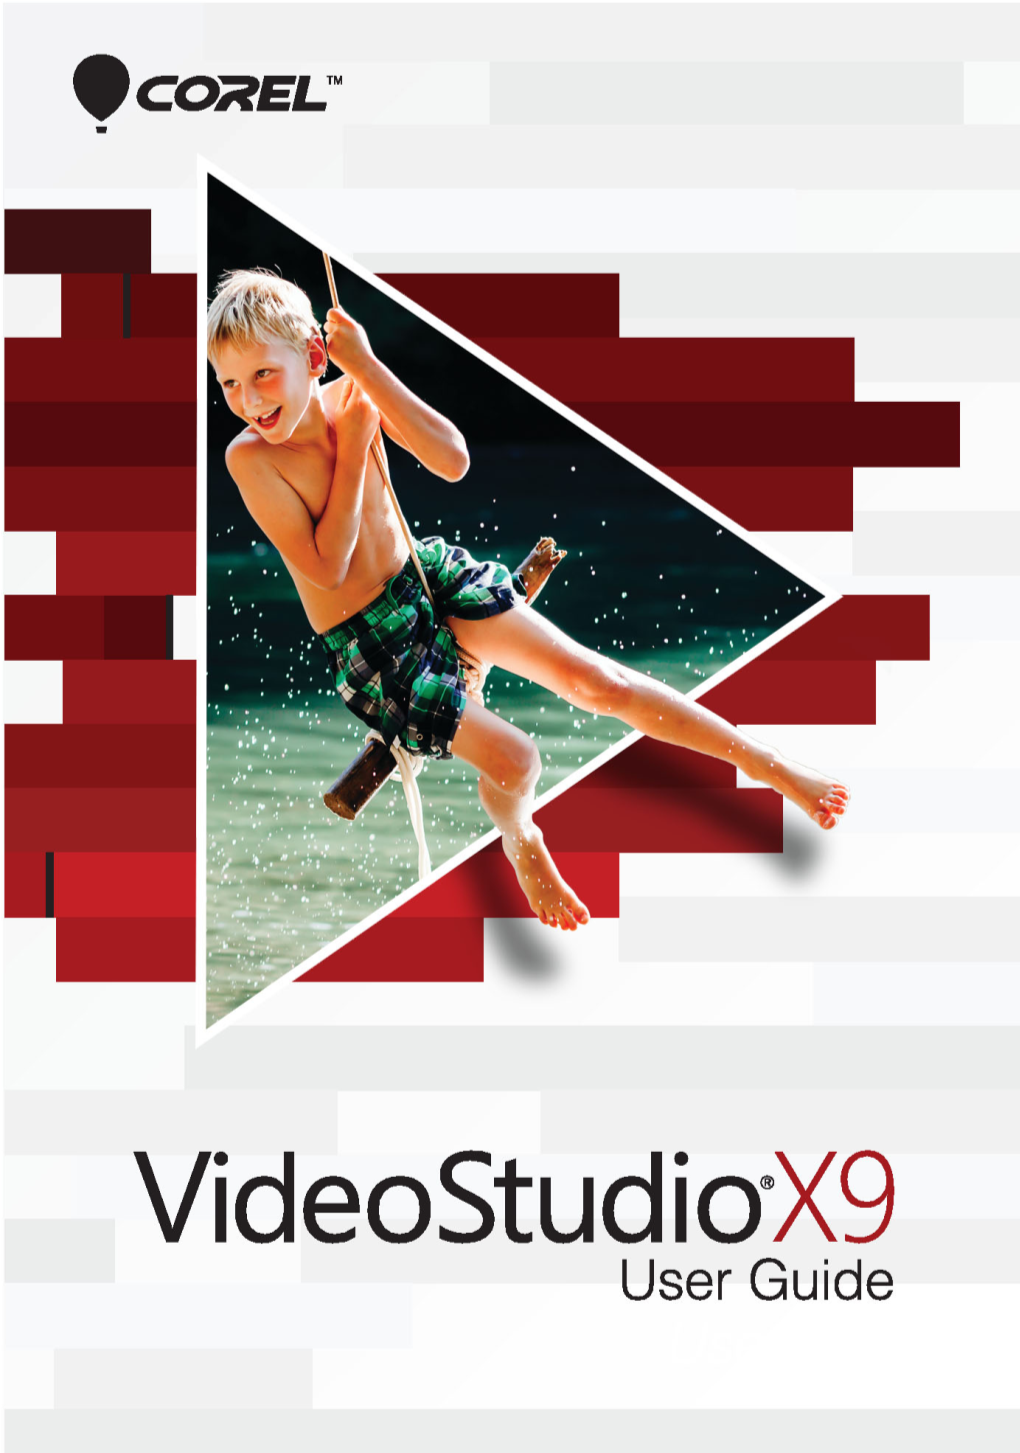 Corel Videostudio X9 User Guide PDF